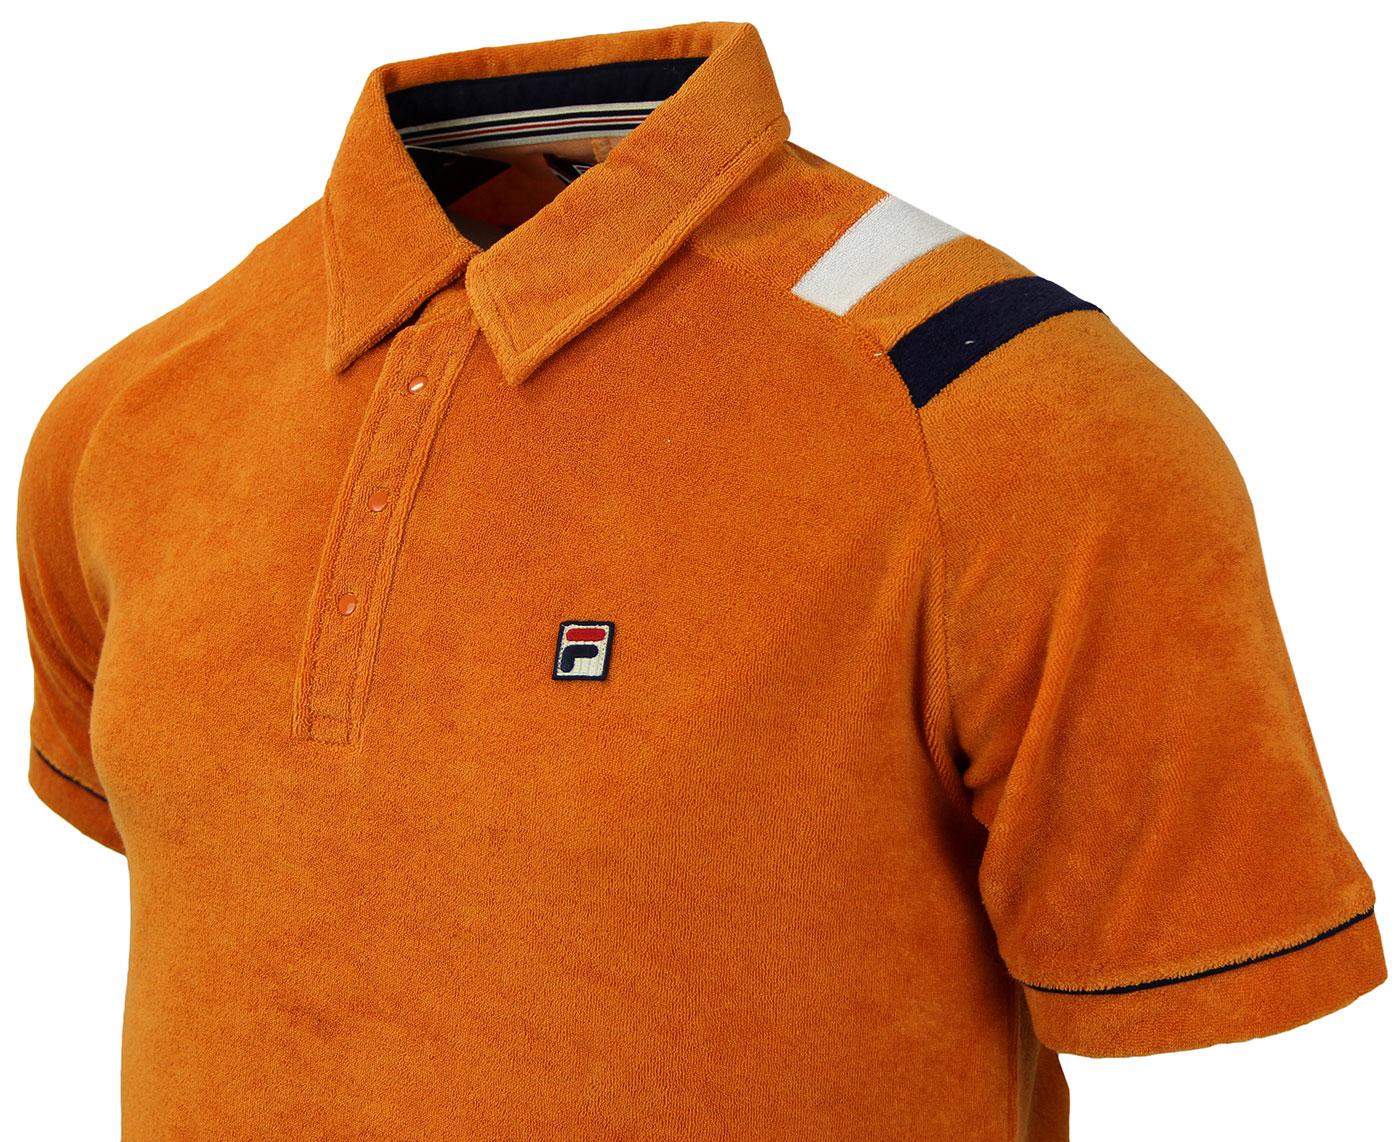 FILA VINTAGE Salice 2 Retro 70s Mod Toweling Polo Shirt Copper